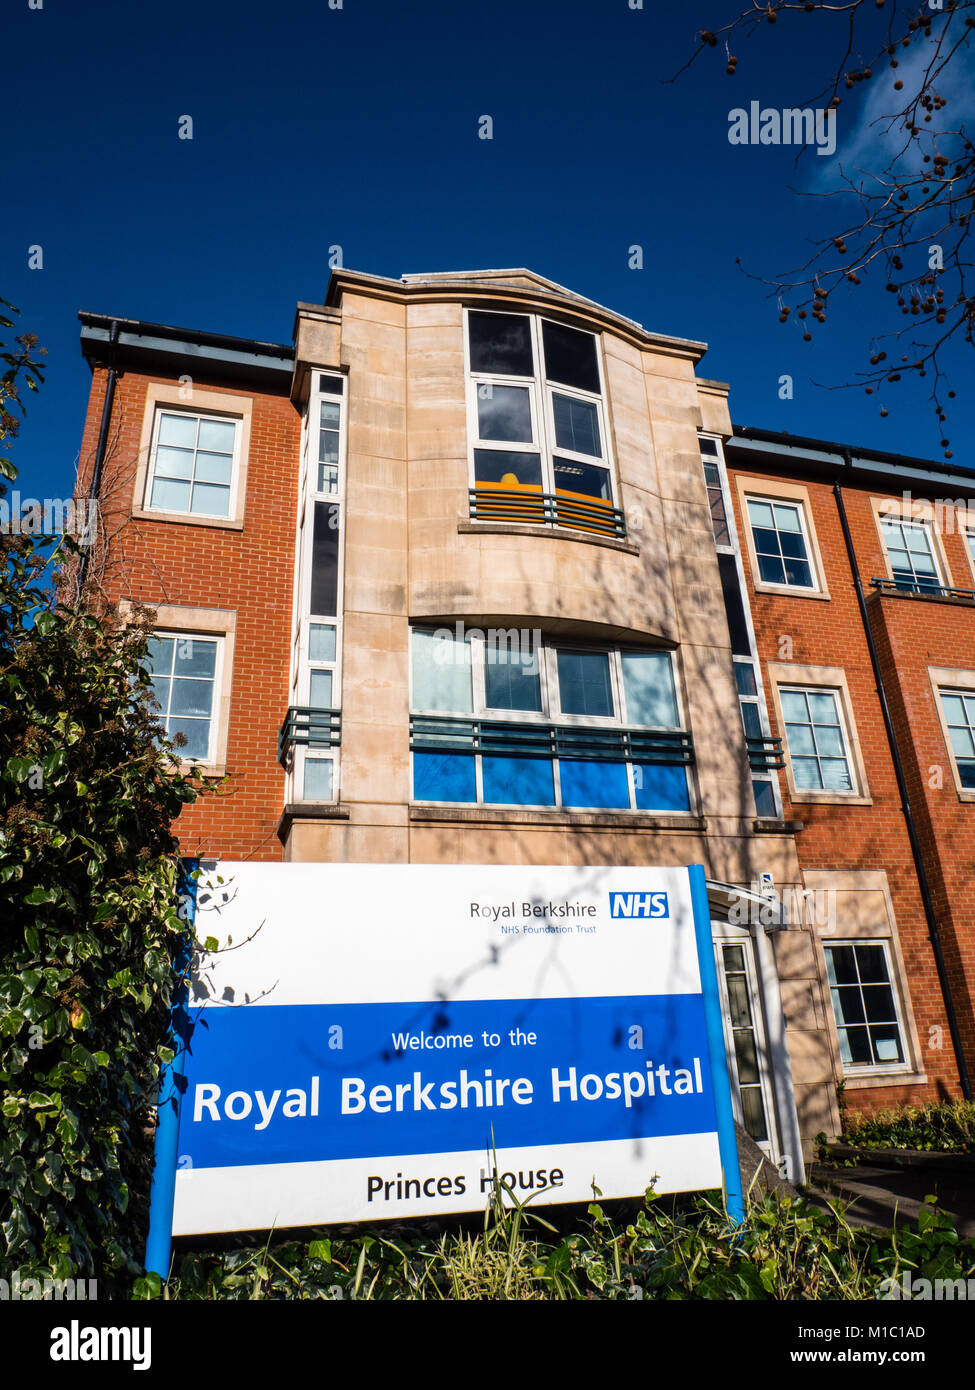 Royal Berkshire Hospital, Princes House, Reading, Berkshire, England, UK, GB. Stock Photo